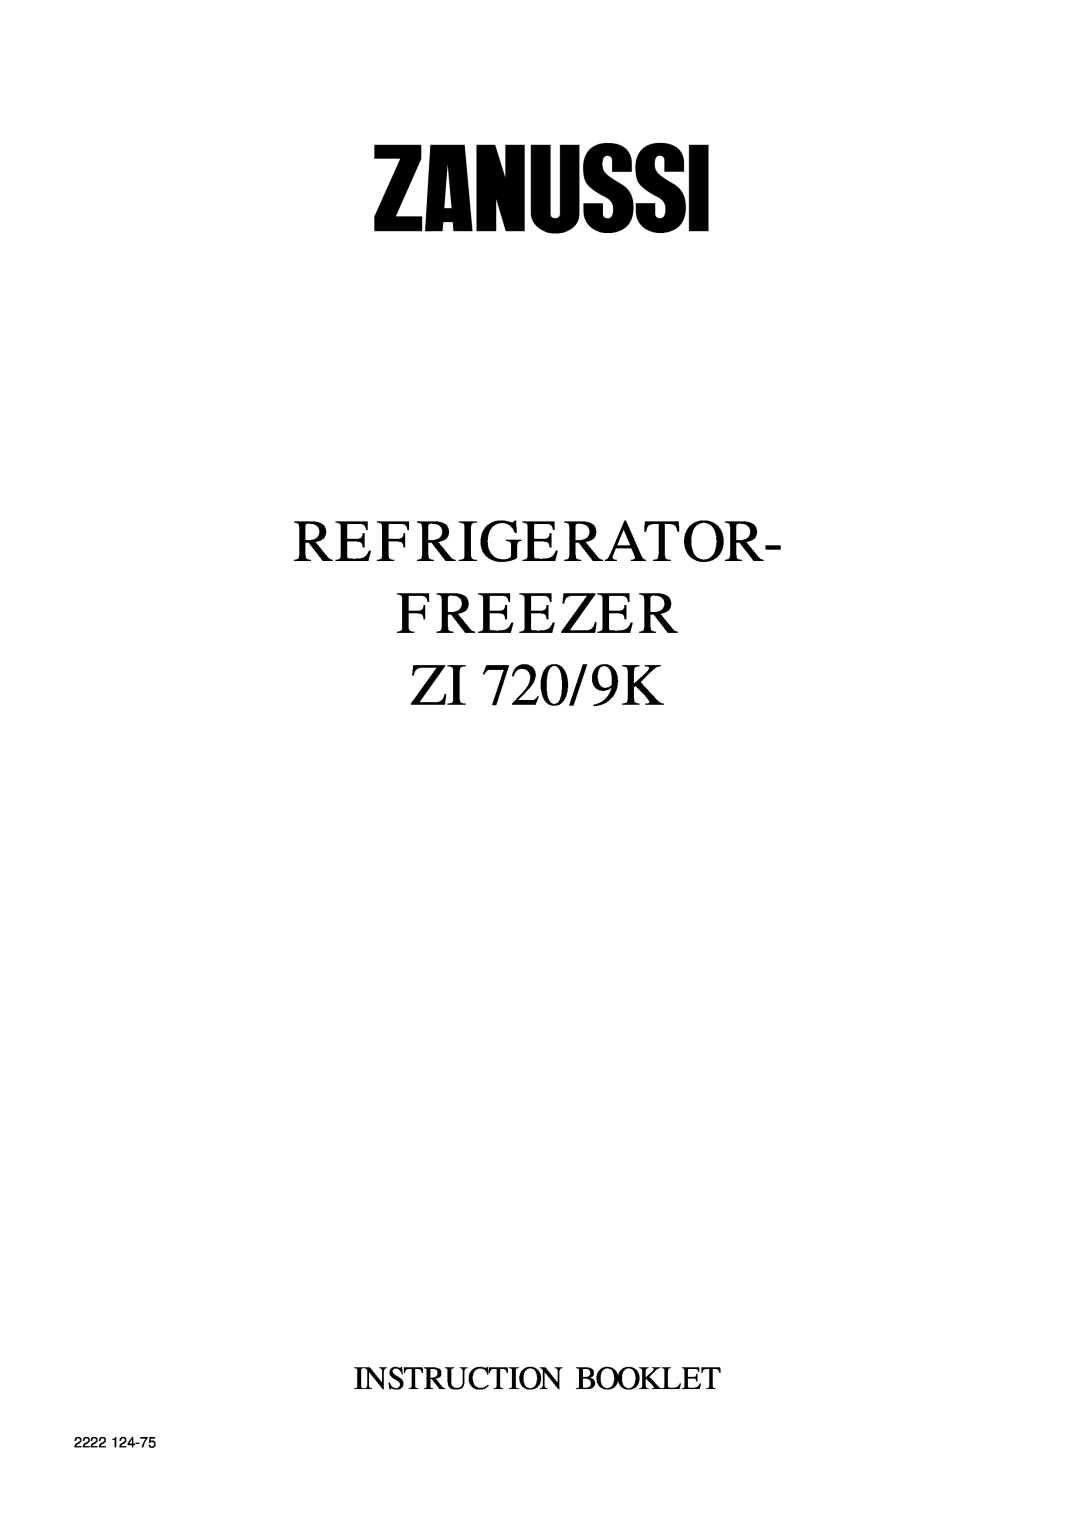 Zanussi manual REFRIGERATOR FREEZER ZI 720/9K, Instruction Booklet, 2222 